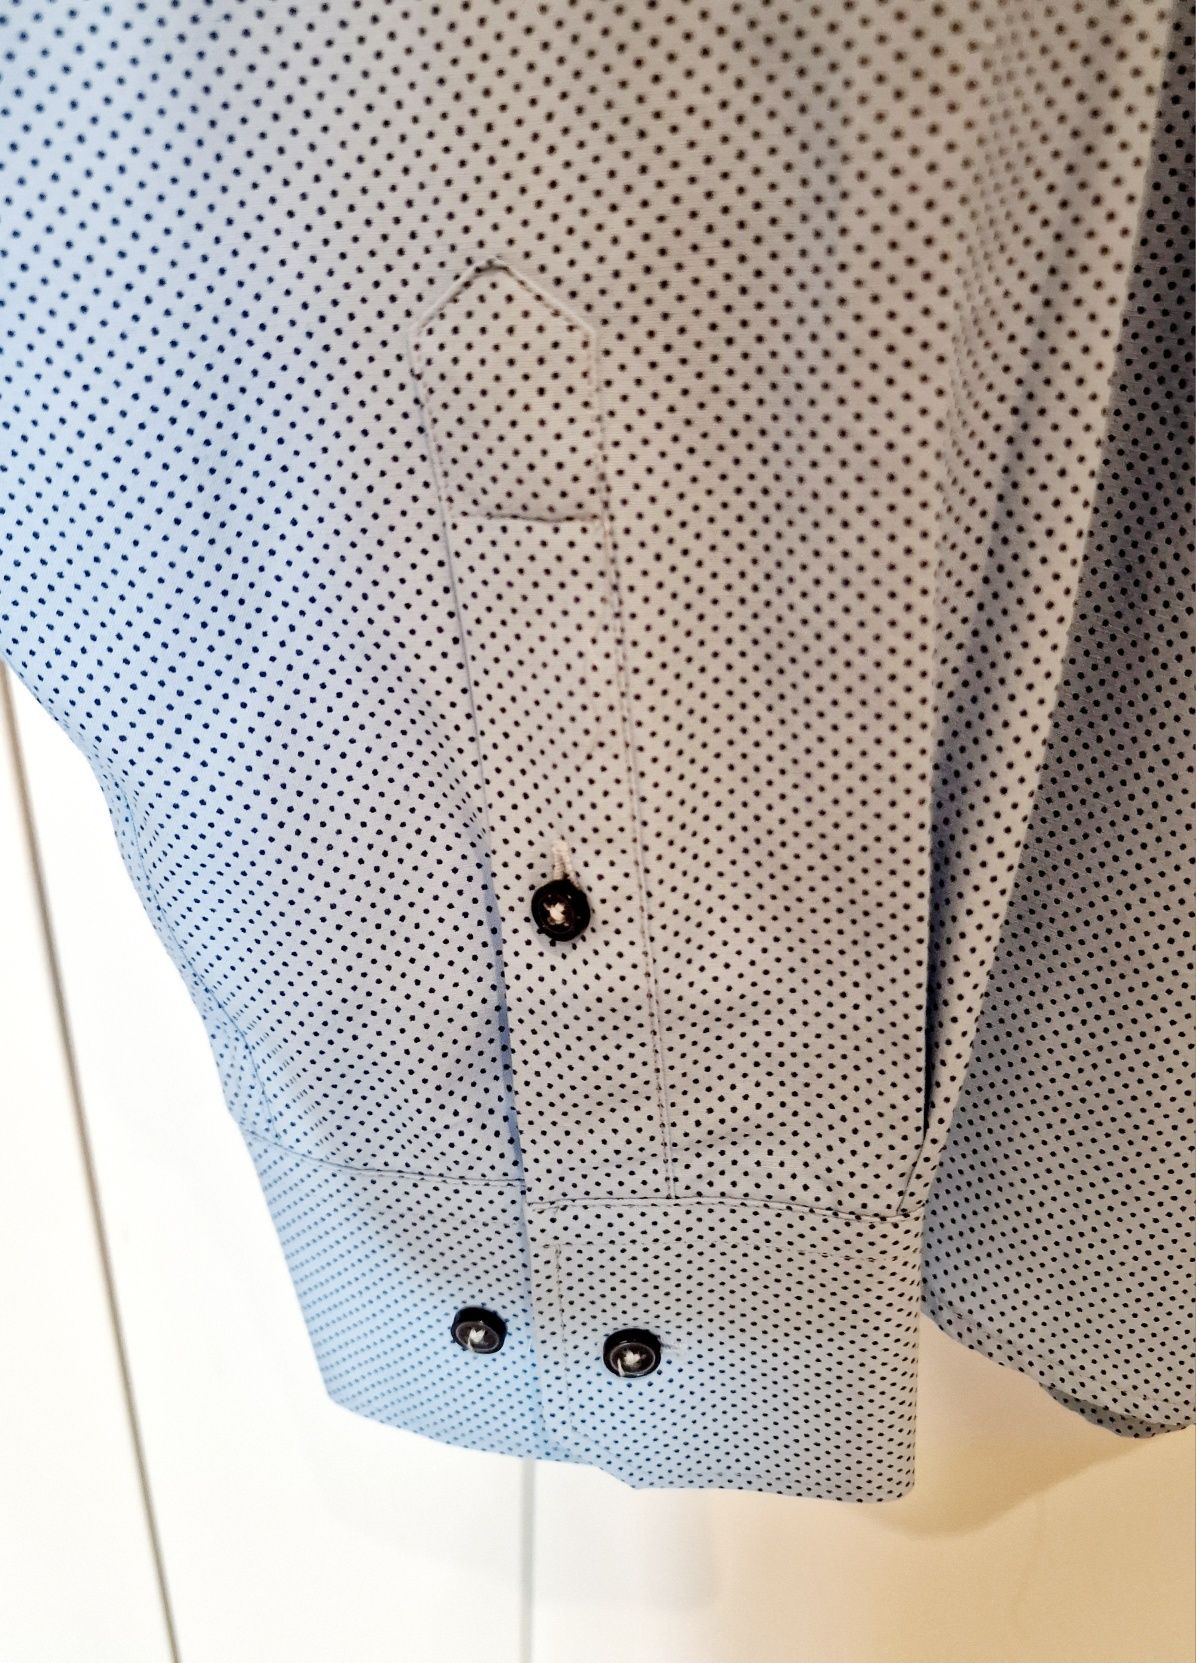 Błękitna koszula męska w groszki KASTOR 46 jak nowa 188/194 cm slim